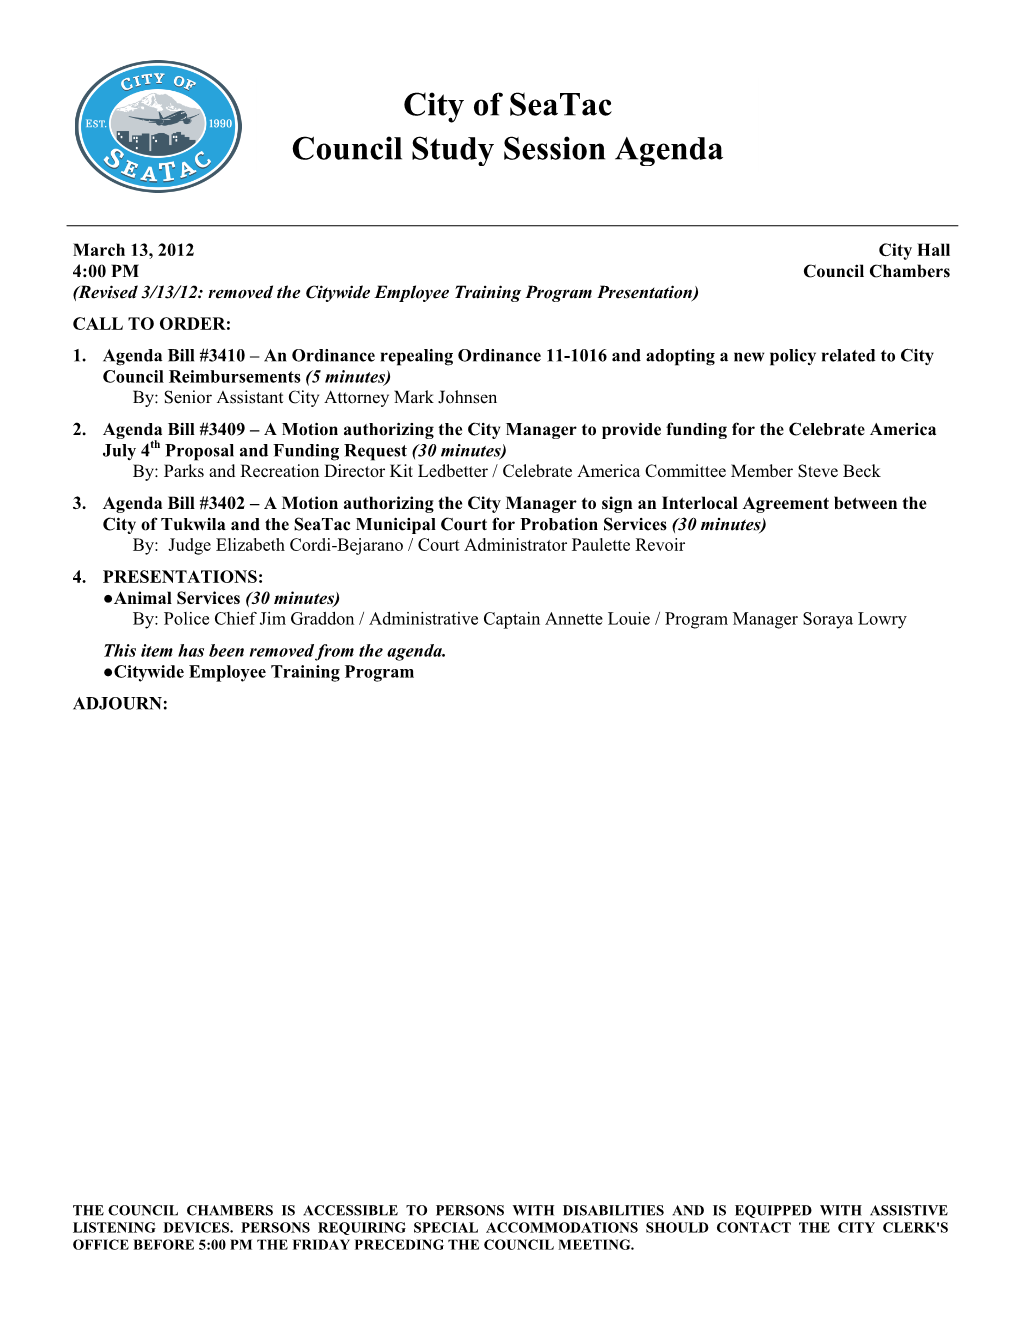 City of Seatac Council Study Session Agenda